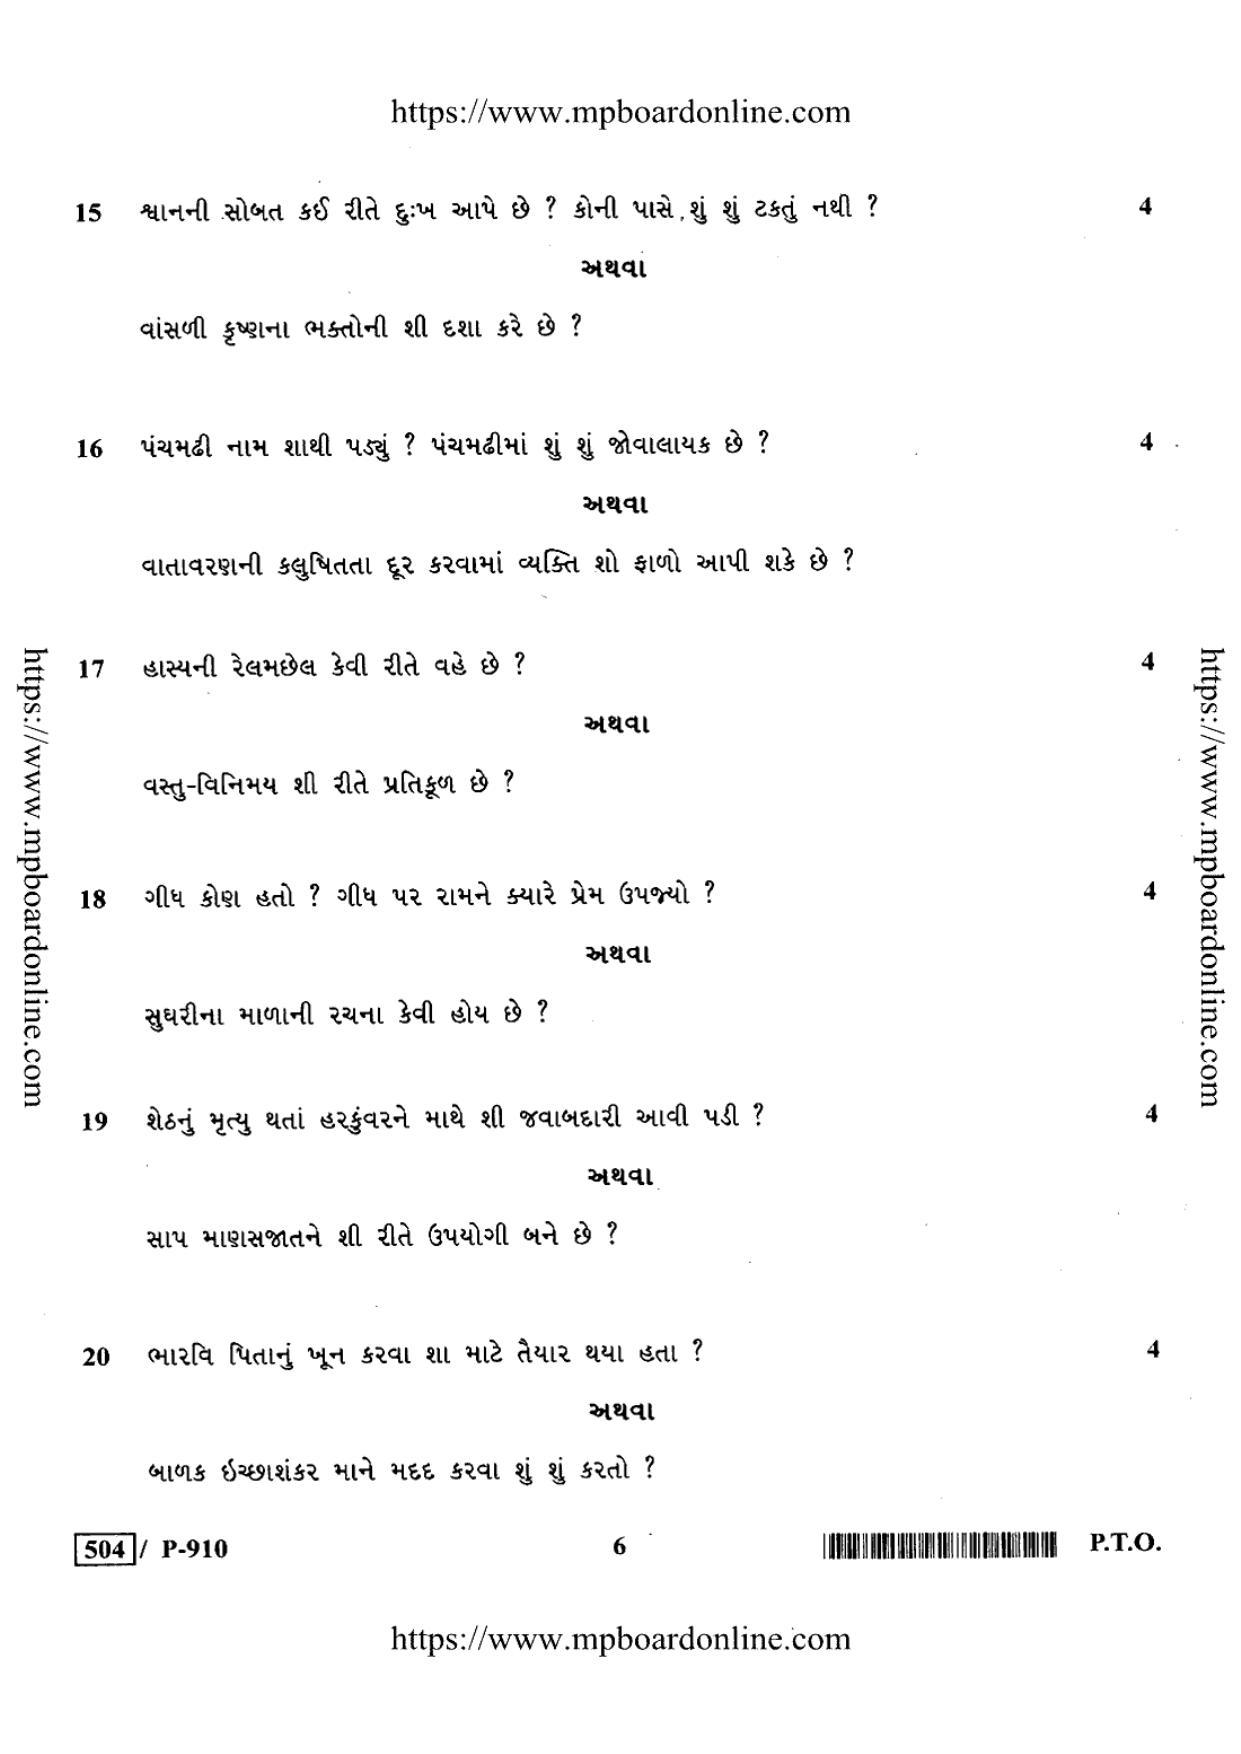 MP Board Class 10 Gujrat General 2020 Question Paper - Page 6